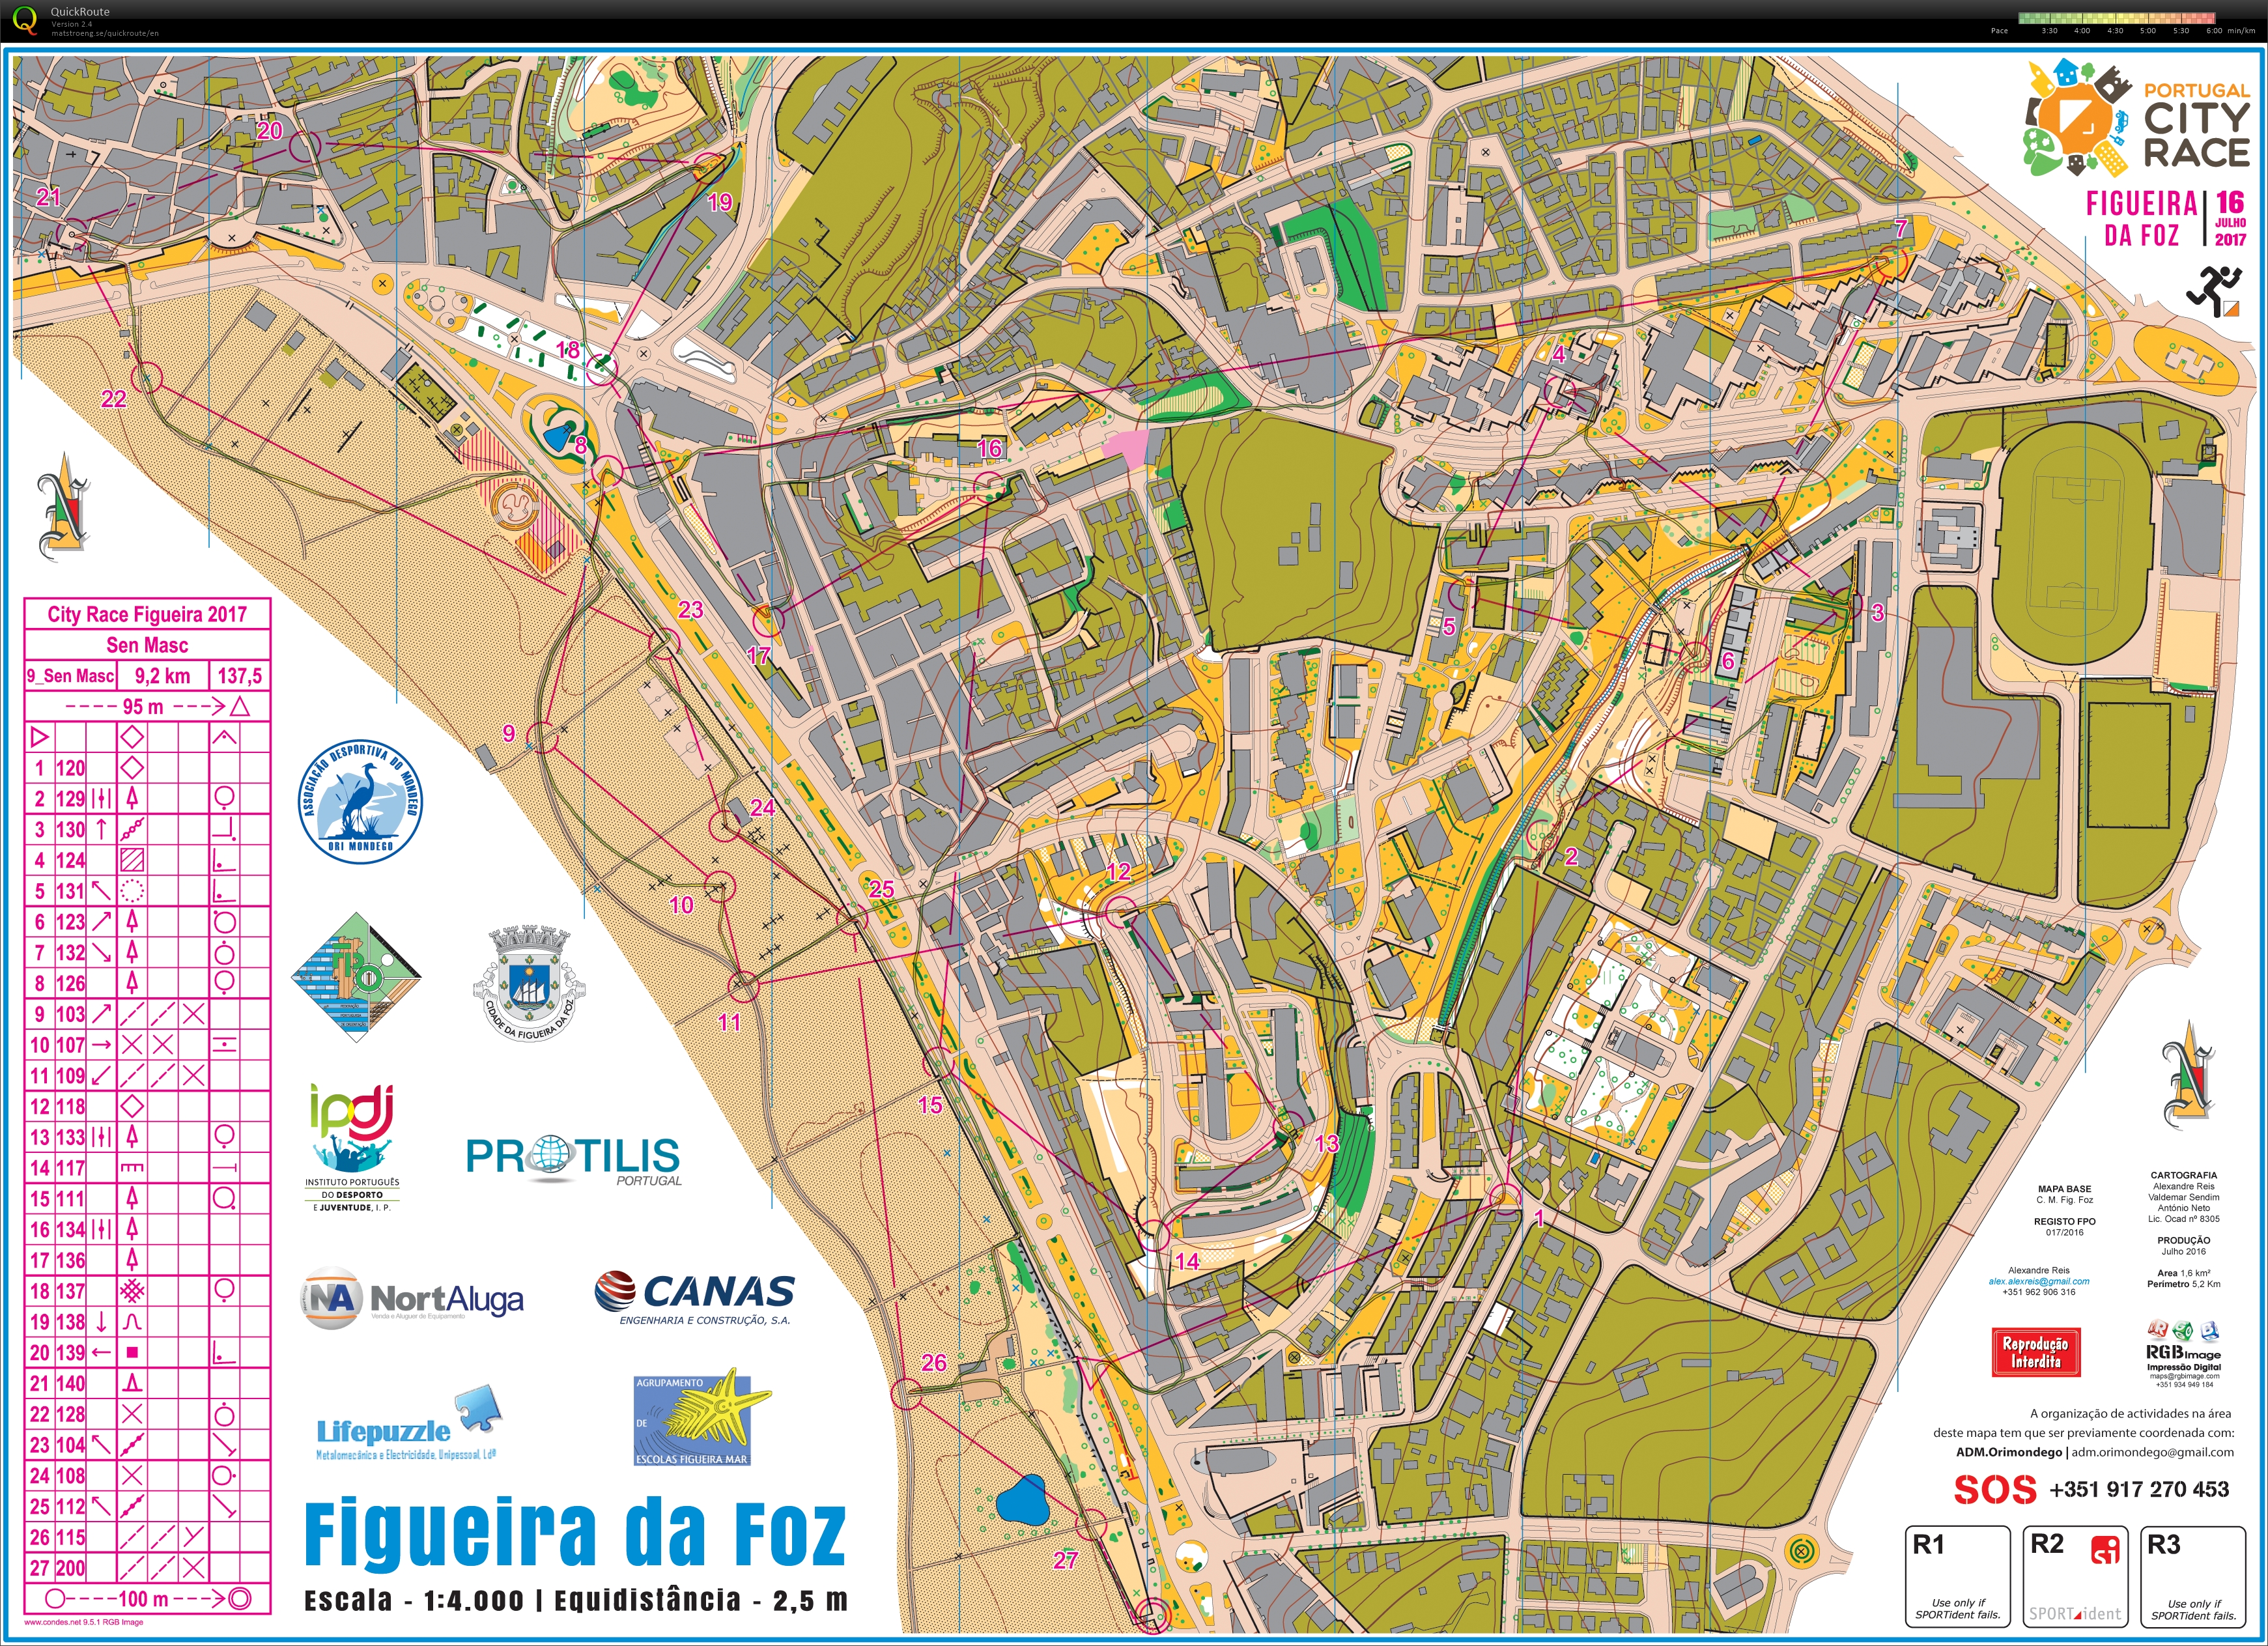 City Race Figueira da Foz 9km (2017-07-15)